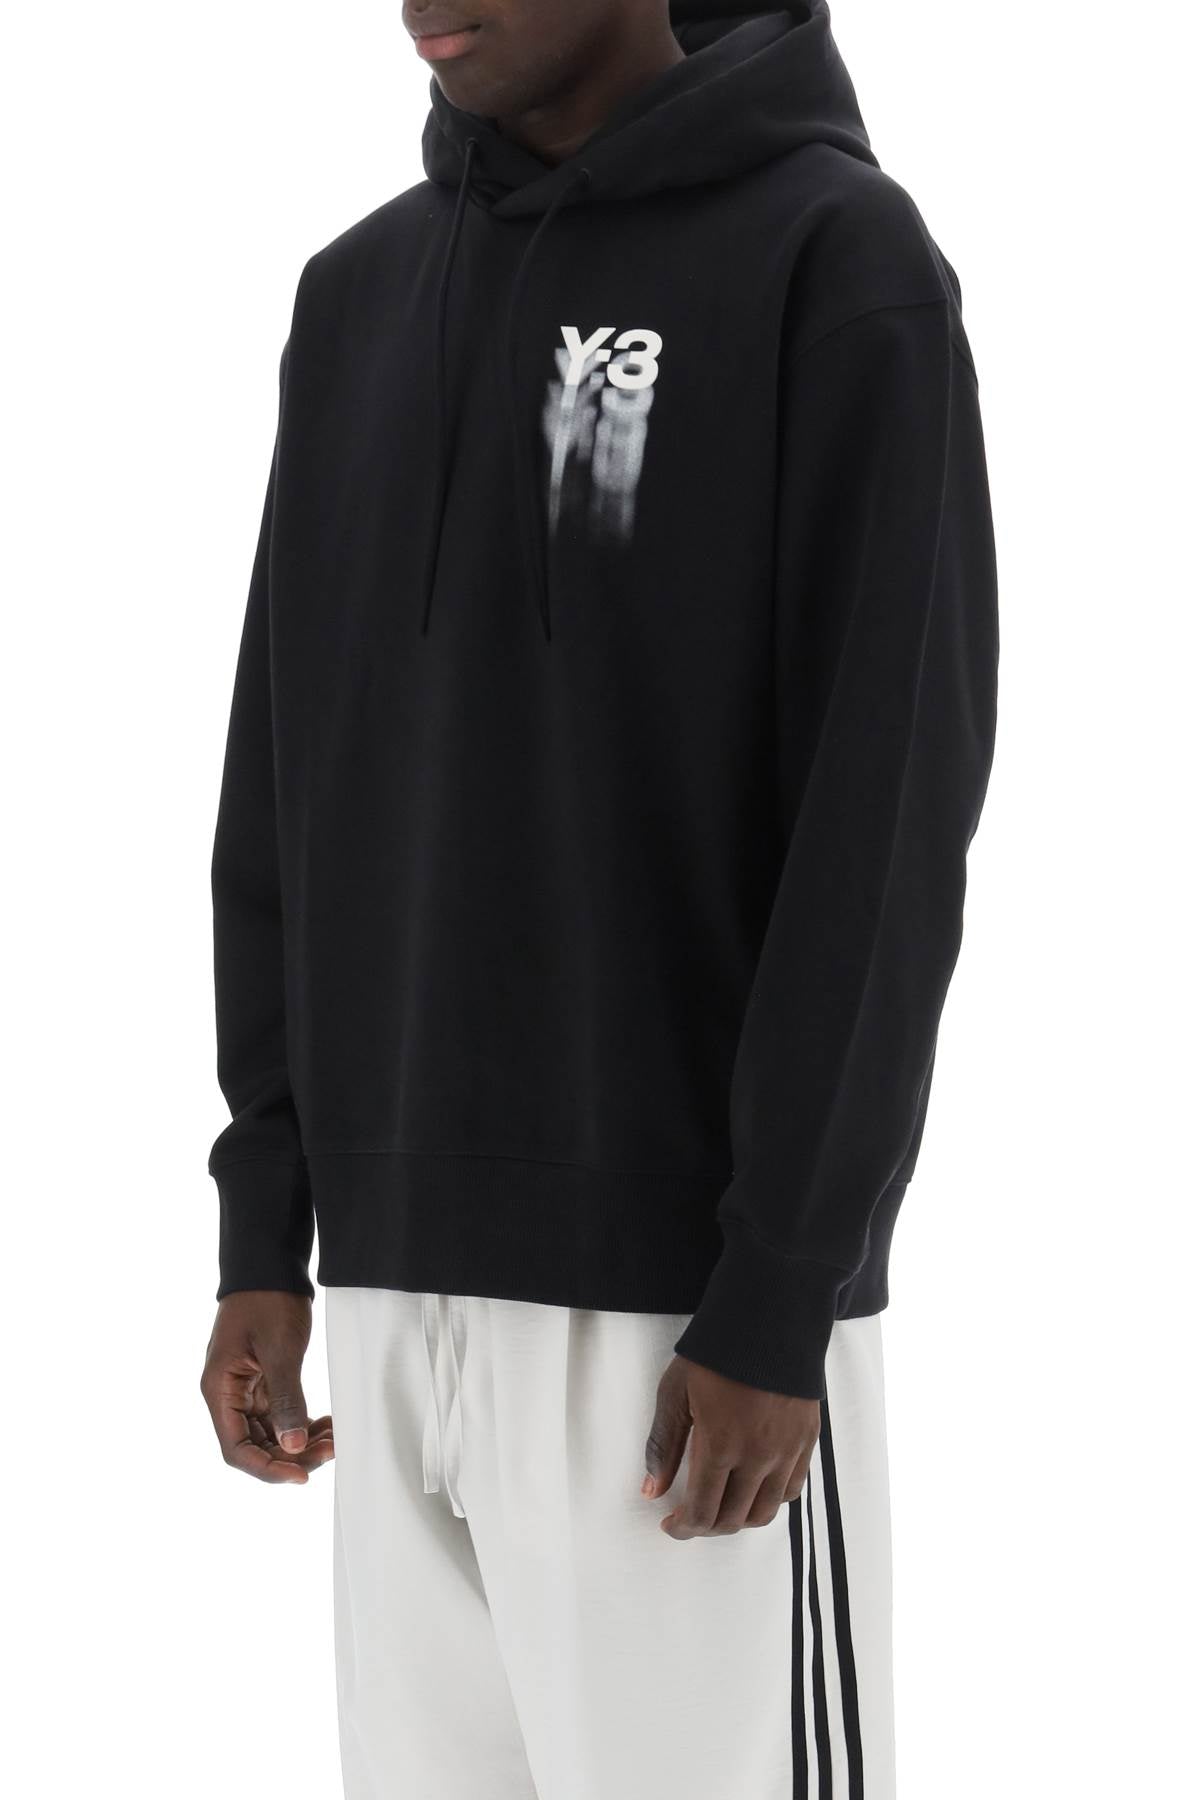 Y-3 hoodie with gradient logo print-men > clothing > t-shirts and sweatshirts > sweatshirts-Y-3-Urbanheer